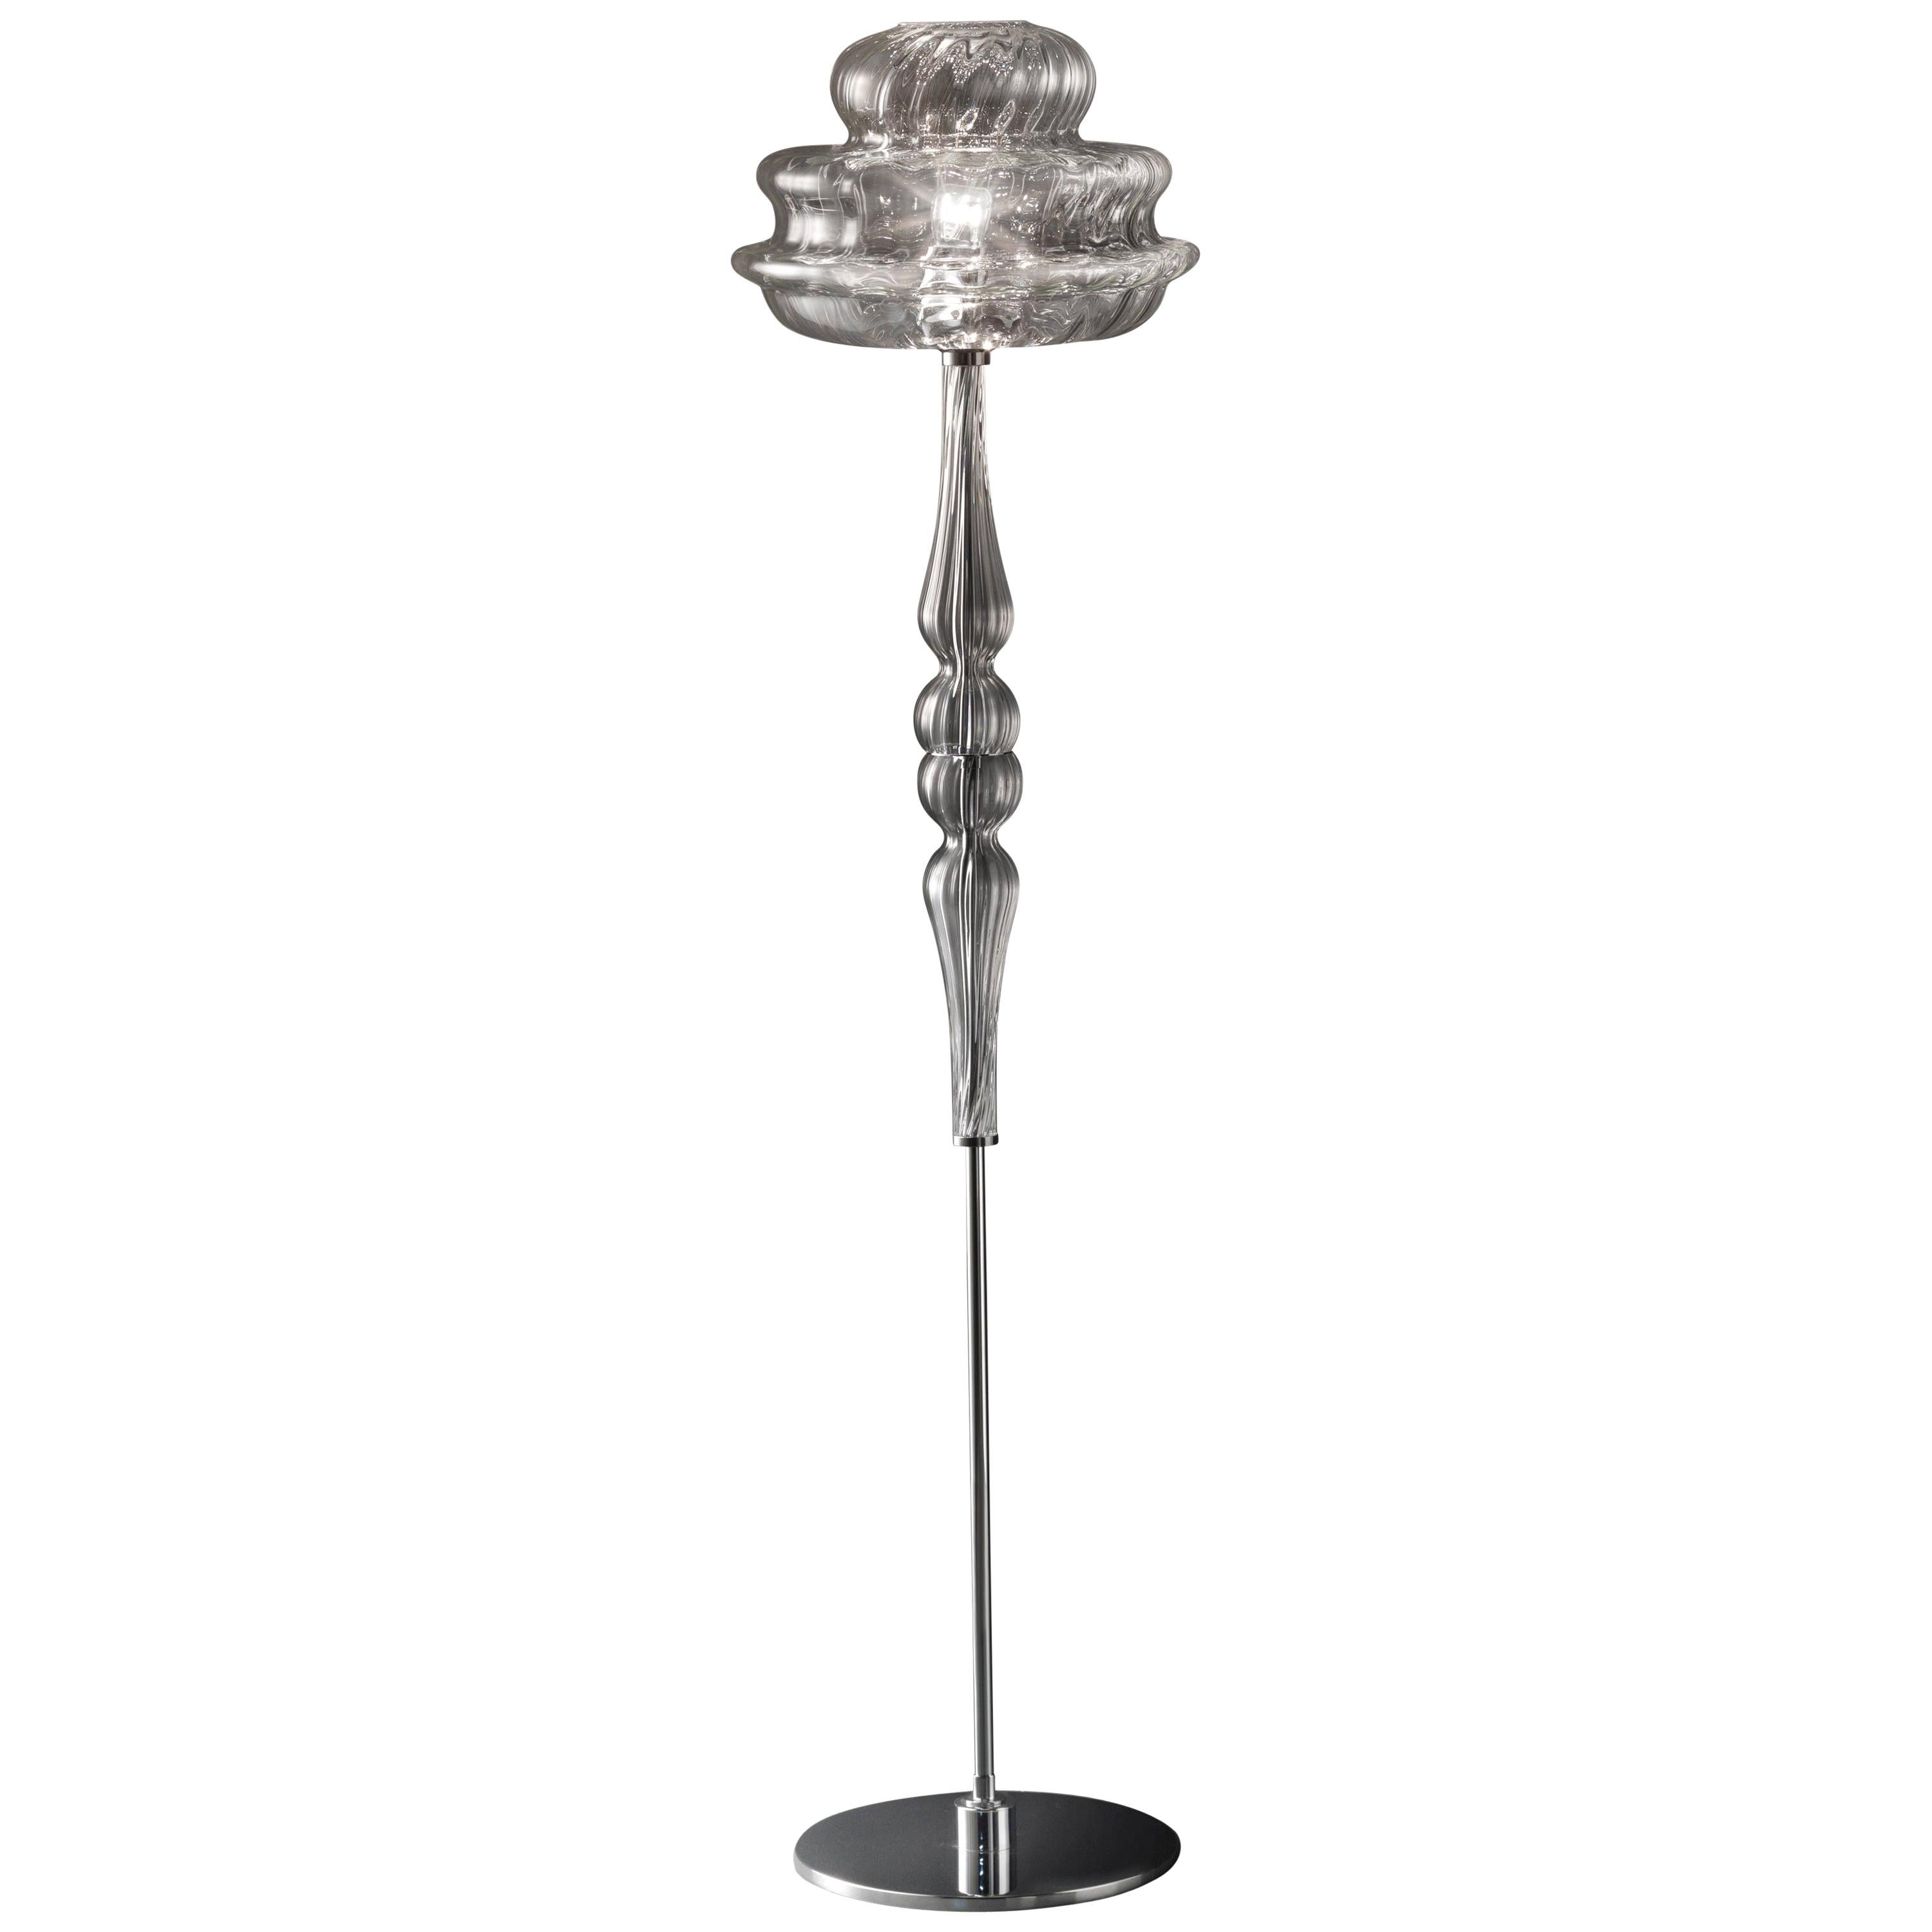 Vistosi Novecento PT Floor Lamp in Crystal Striped by Romani Saccani